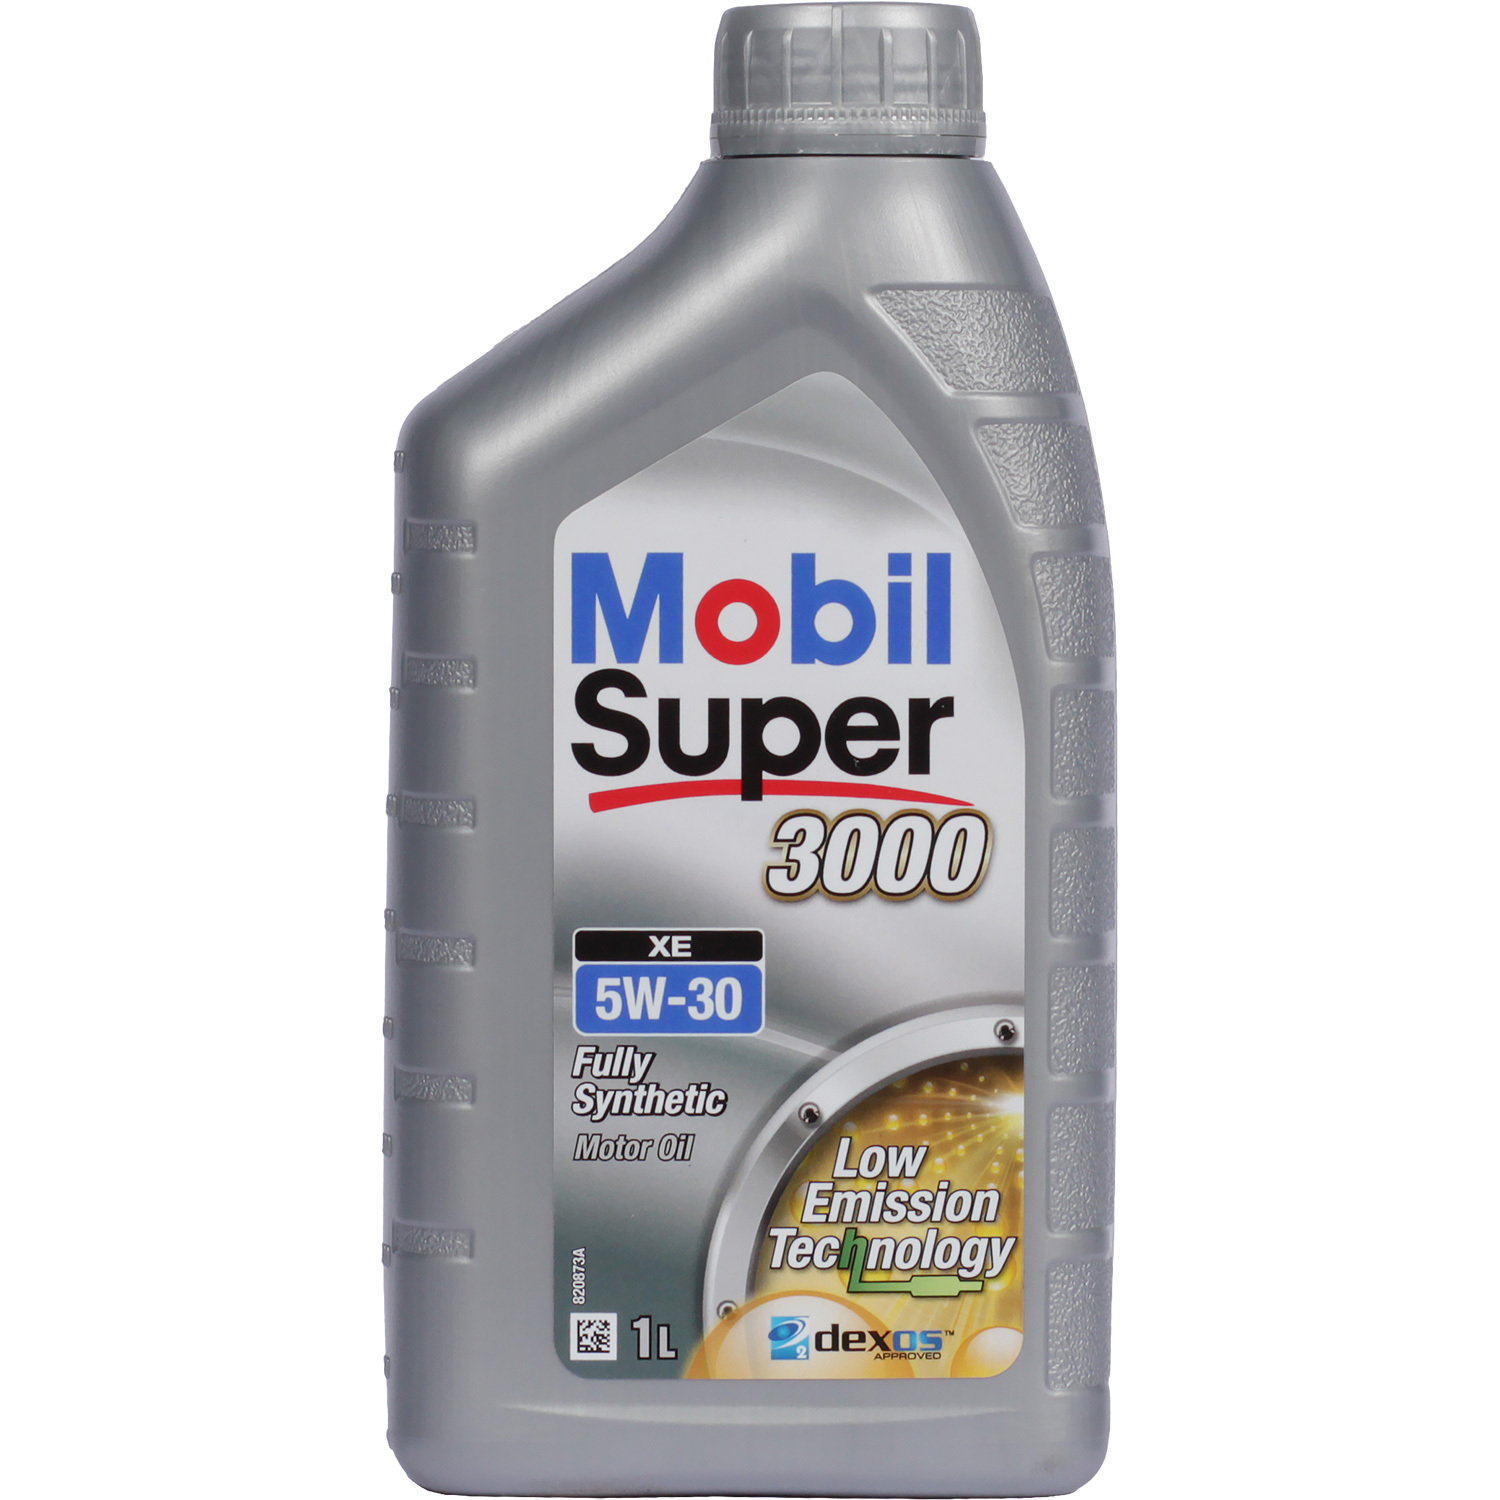 Mobil Моторное масло Mobil Super 3000 XE 5W-30, 1 л масло моторное mobil super 3000 x1 5w 40 1 л синтетика